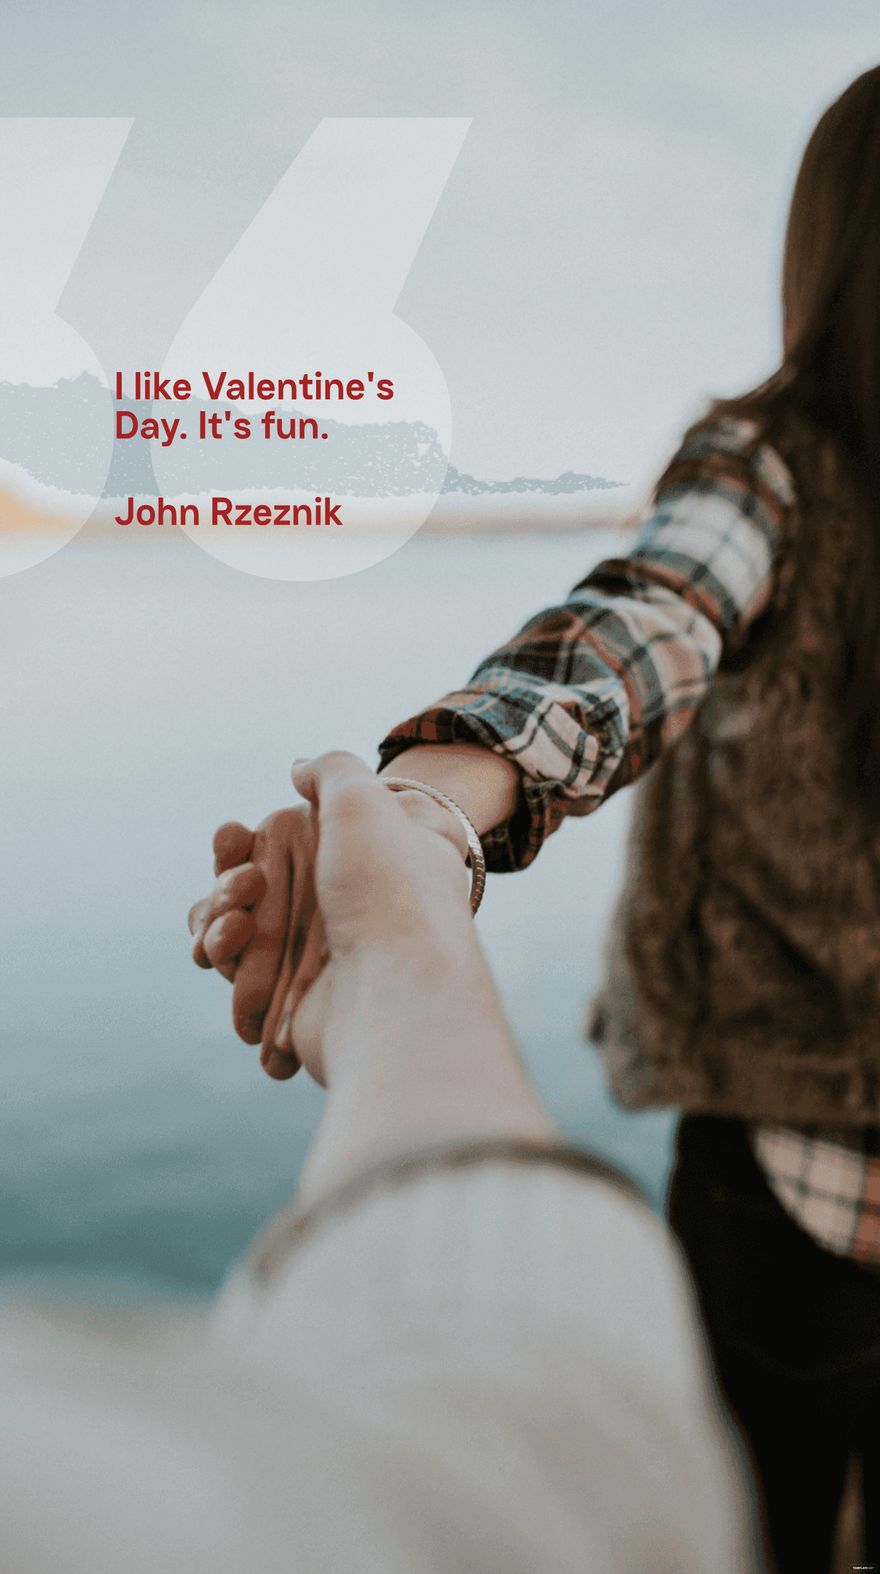 Free John Rzeznik - I like Valentine's Day. It's fun. in JPEG